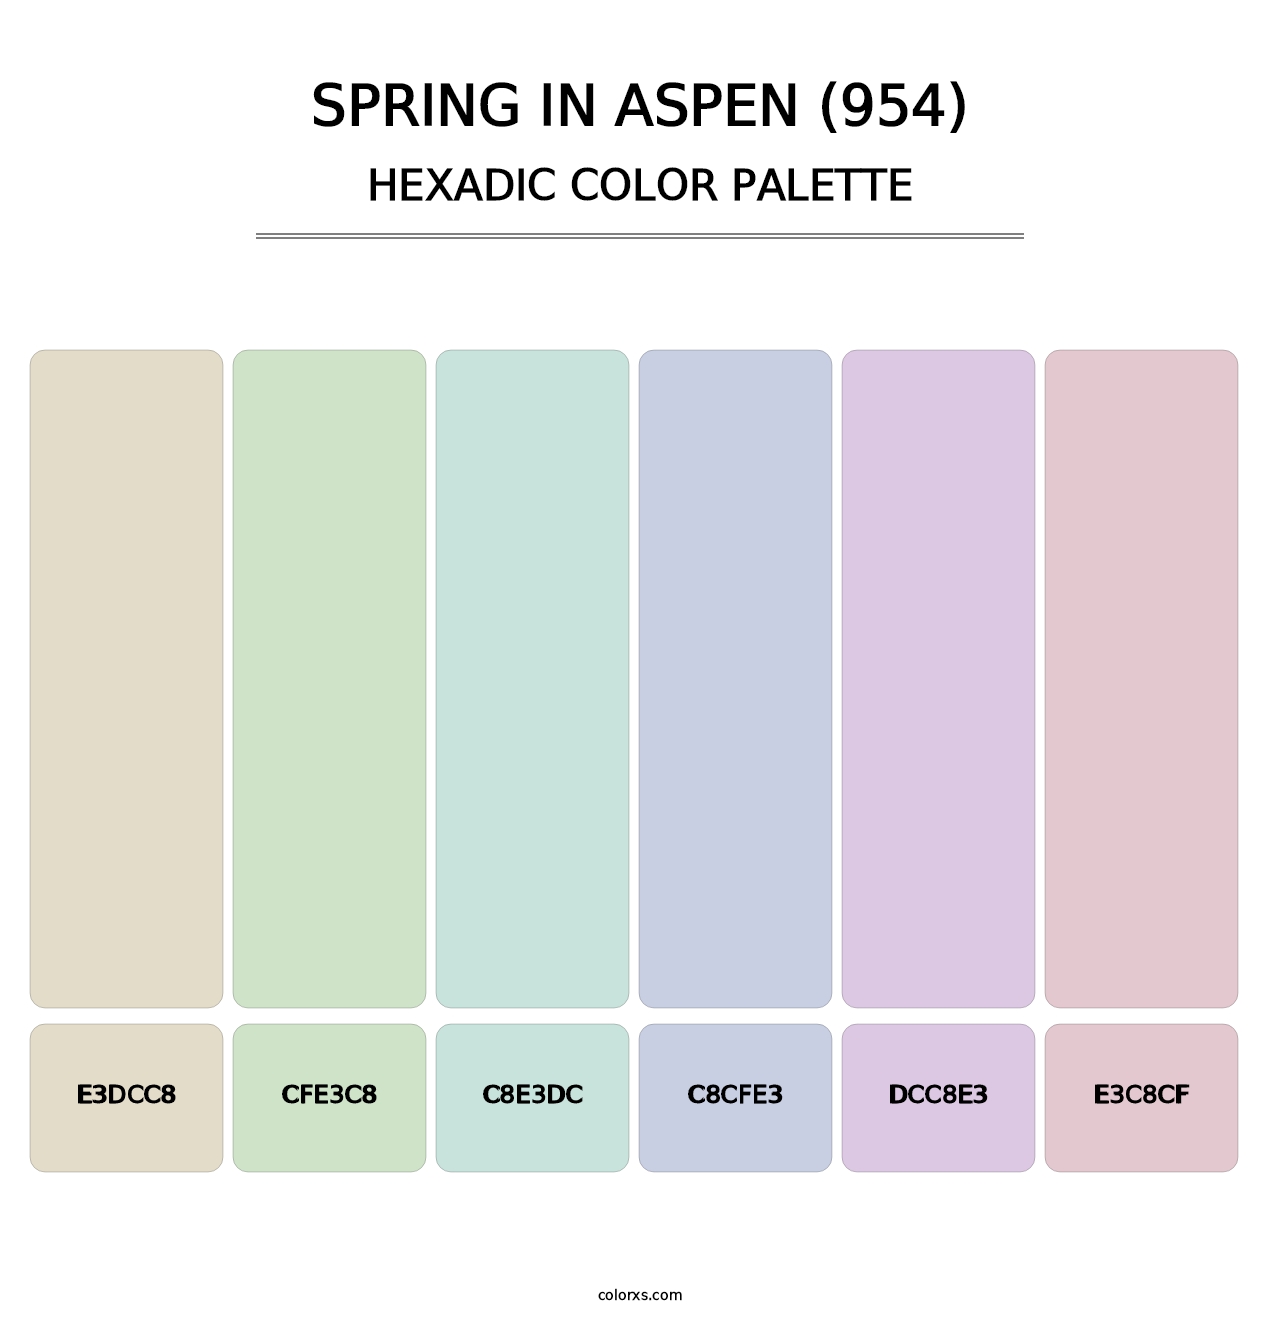 Spring in Aspen (954) - Hexadic Color Palette